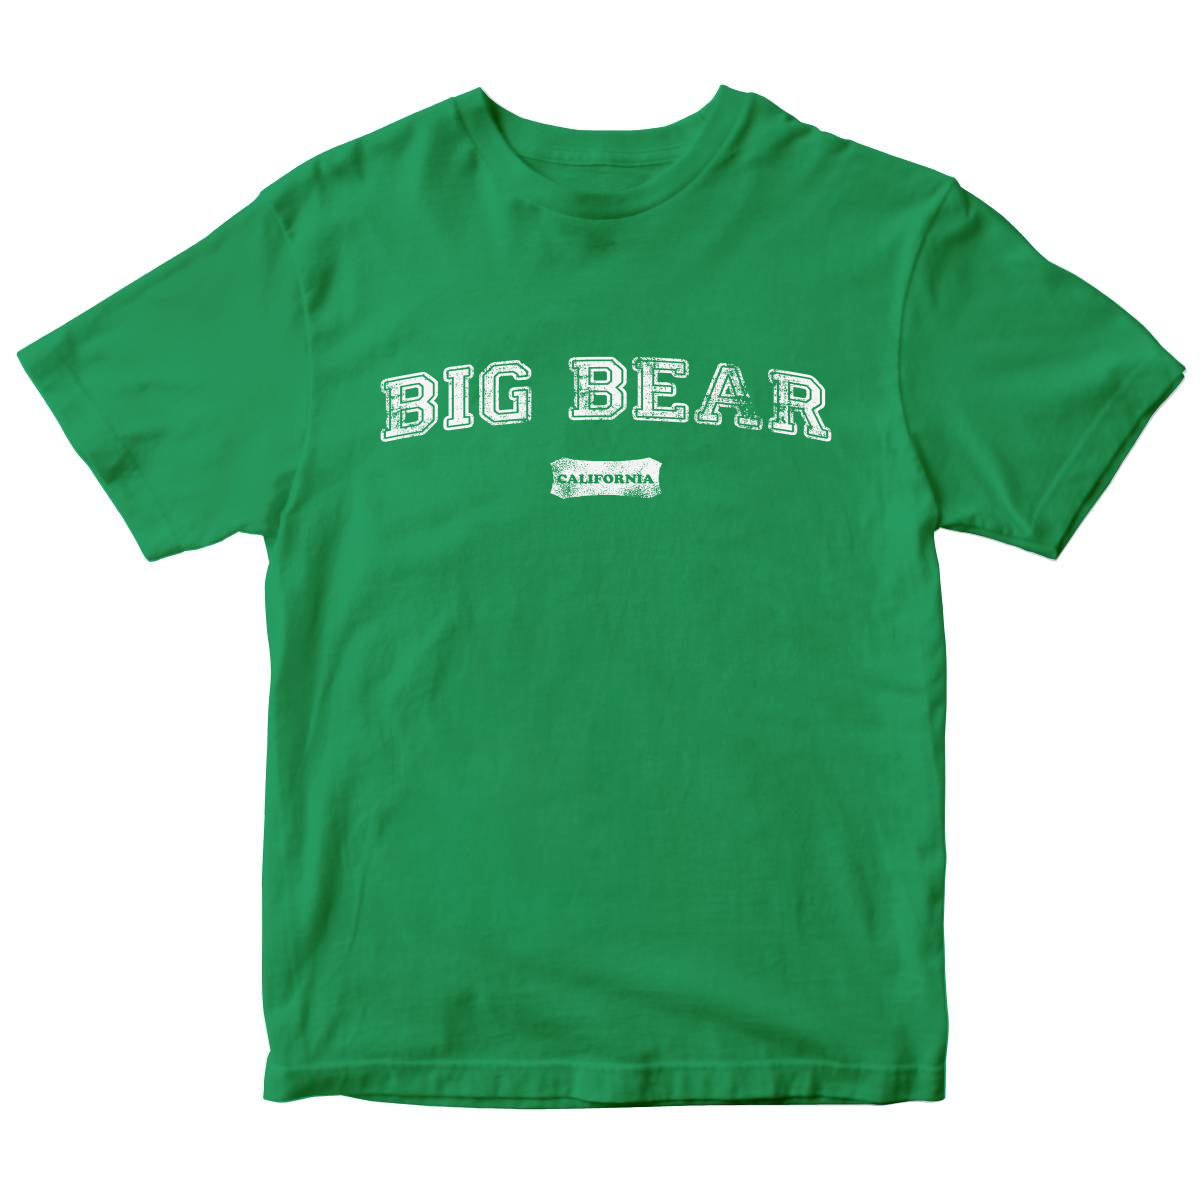 Big Bear Represent Kids T-shirt